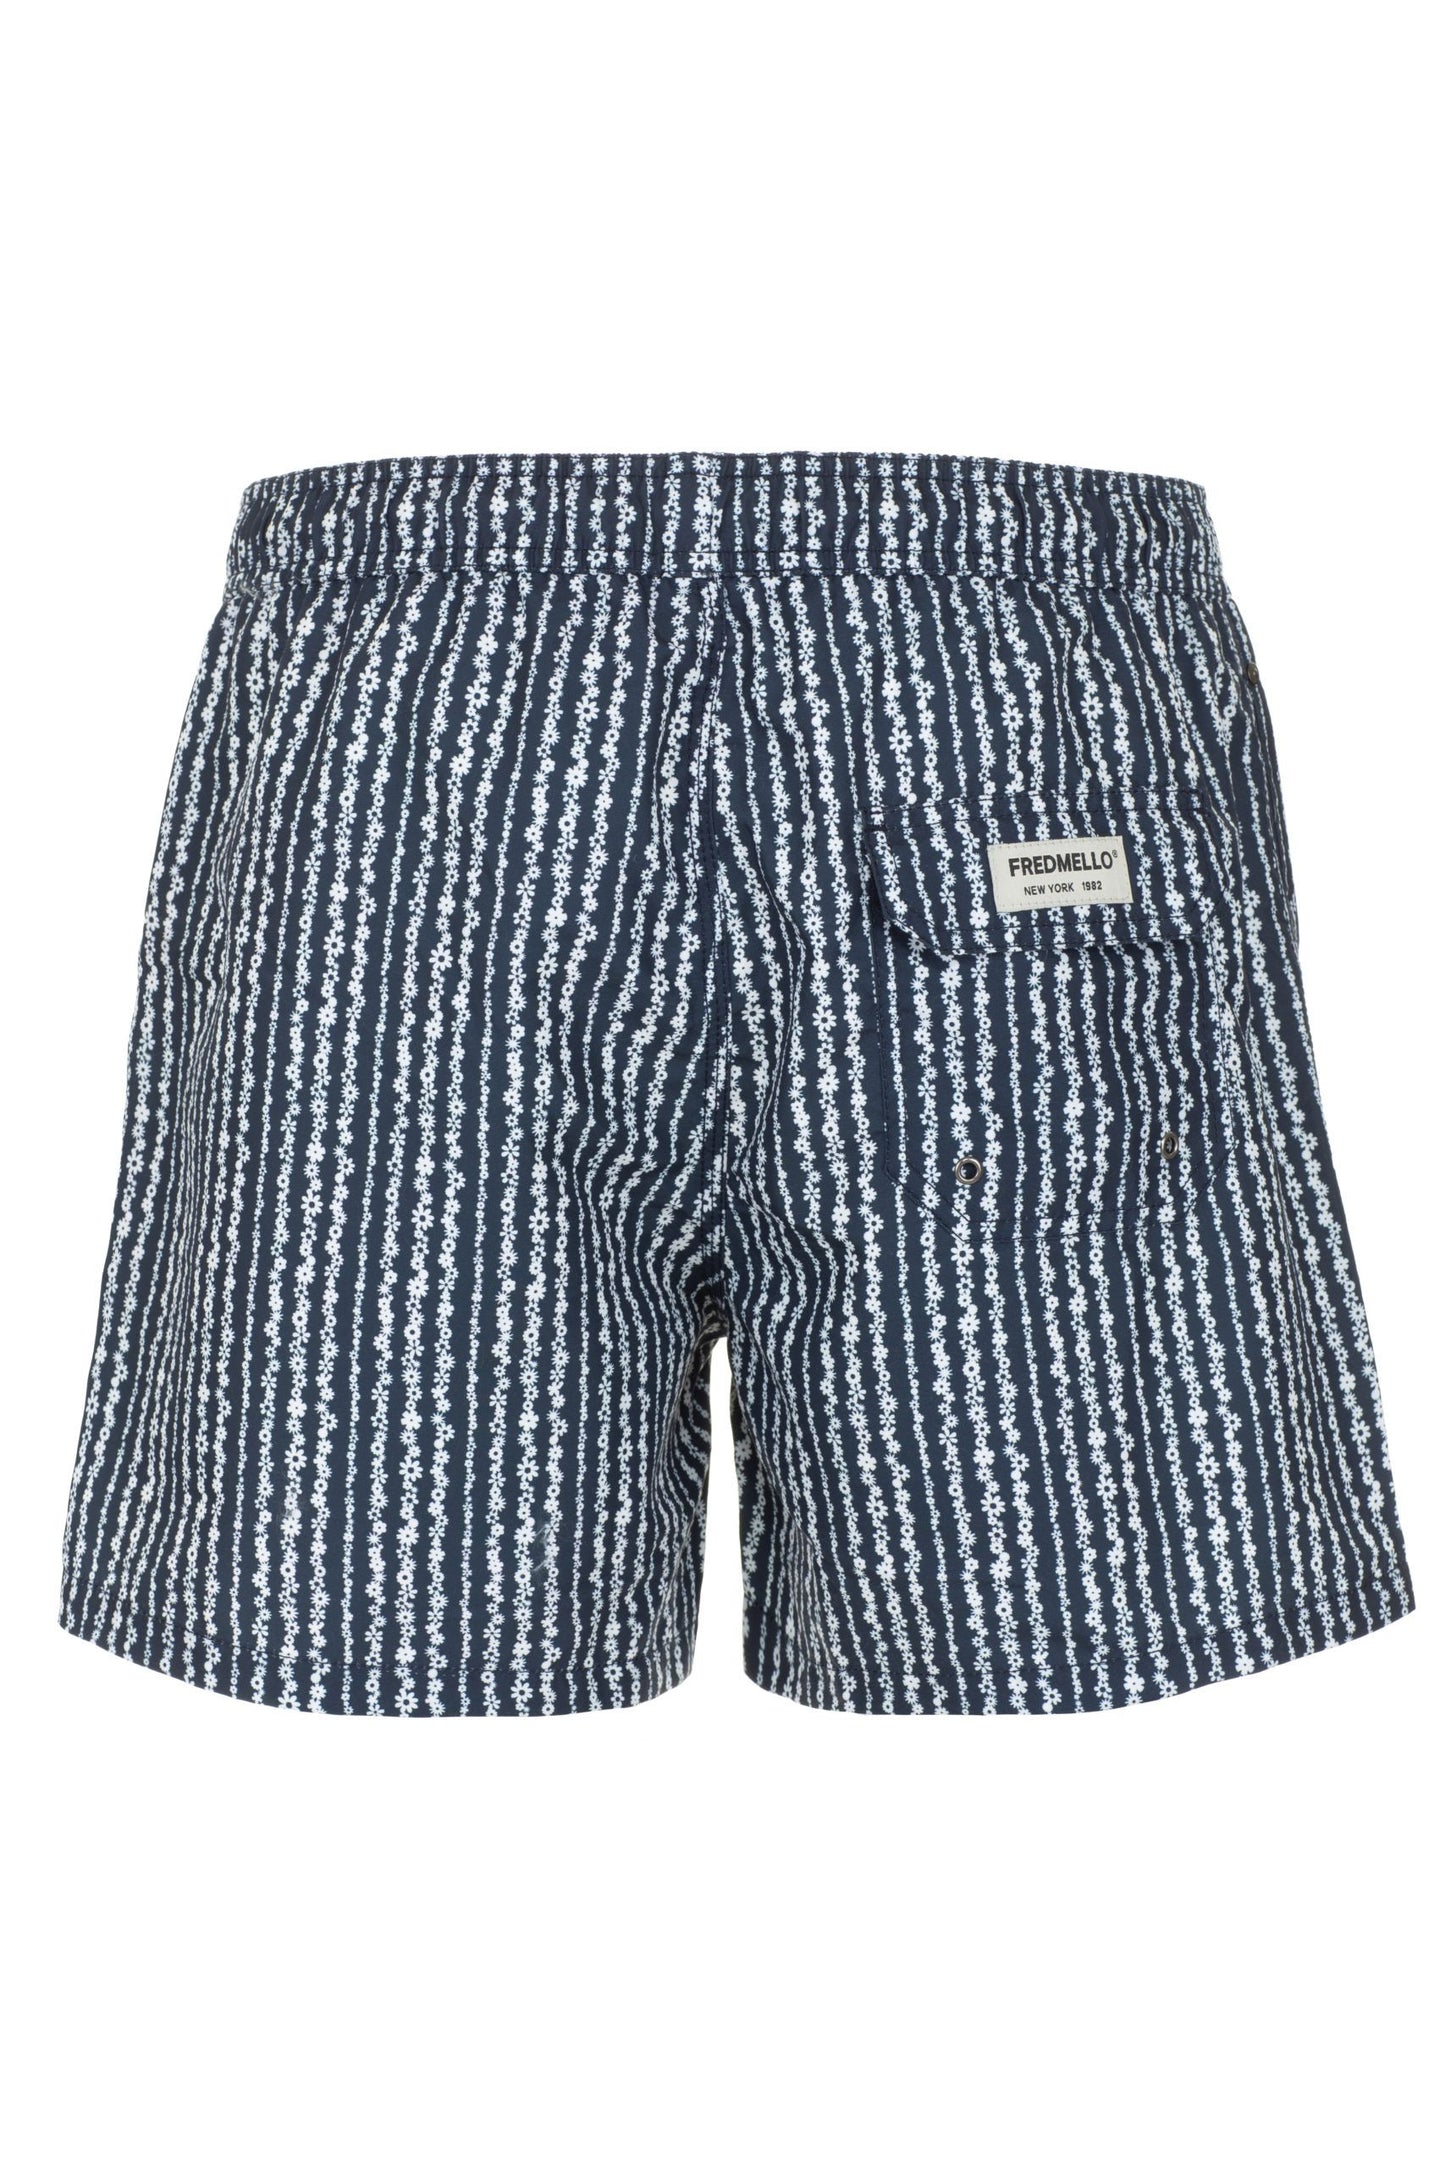 Fred Mello Chic Blue Fantasy Beach Shorts